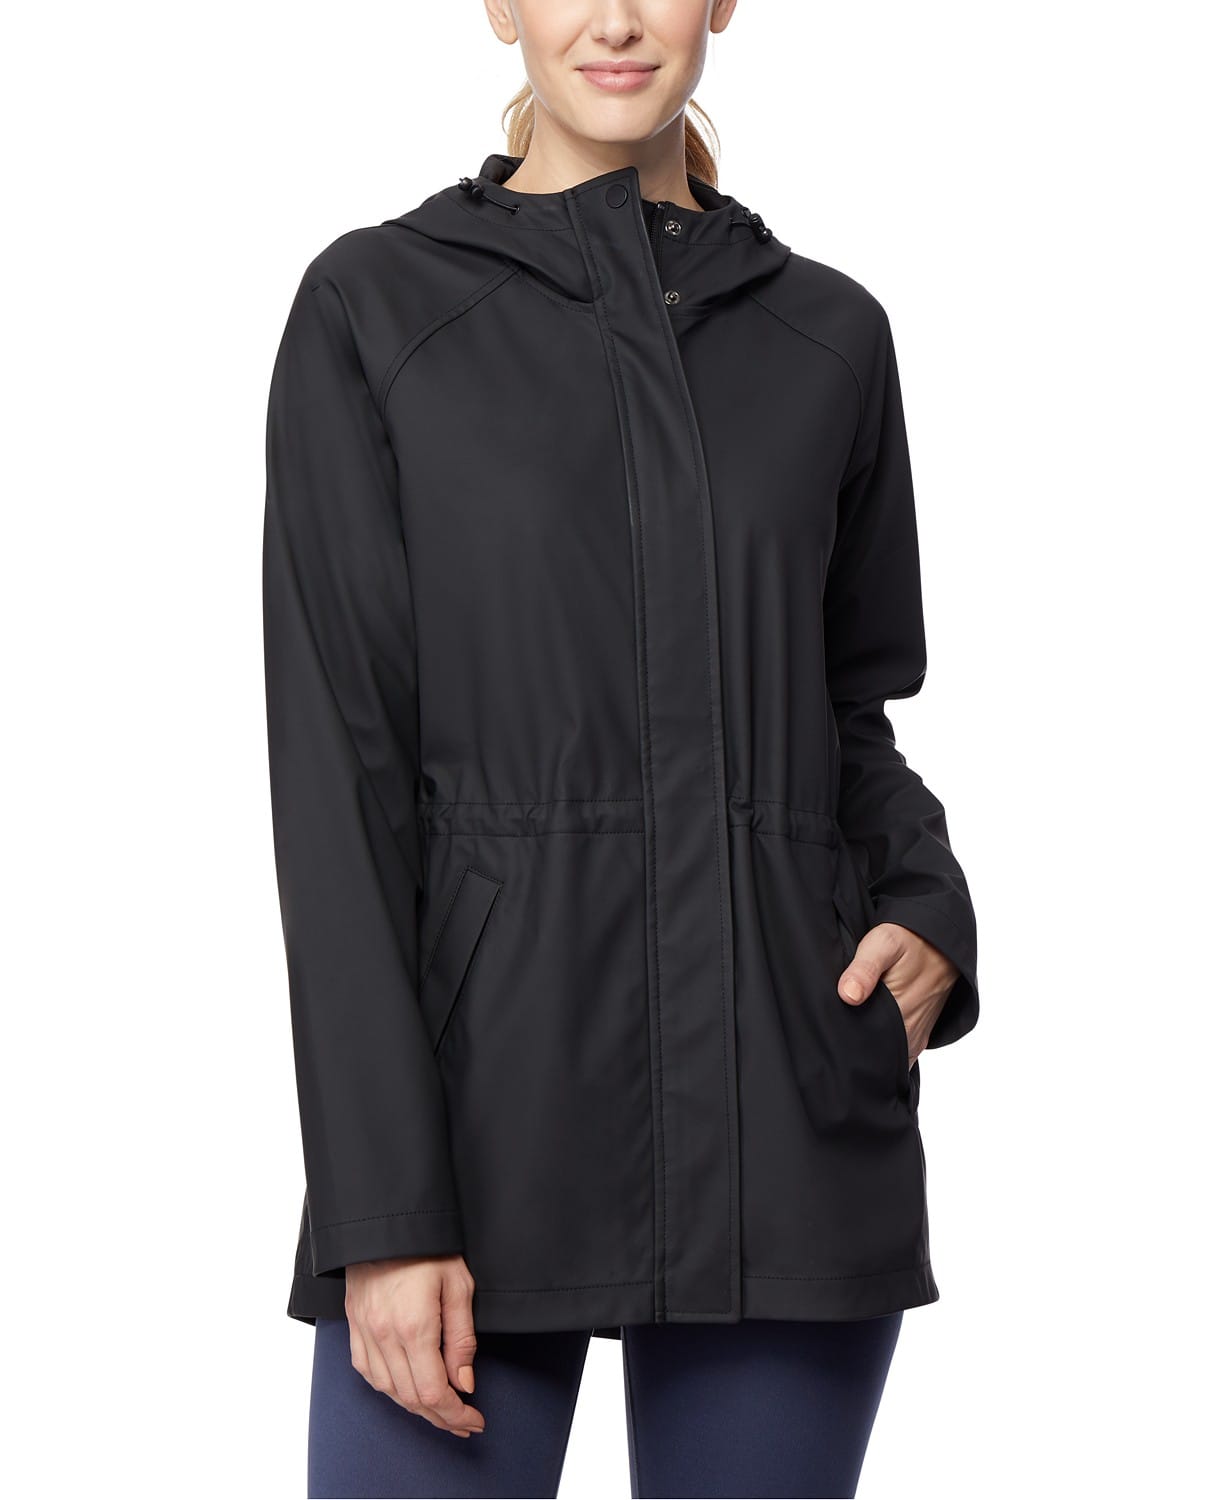 woocommerce-673321-2209615.cloudwaysapps.com-32-degrees-womens-black-water-resistant-hooded-raincoat